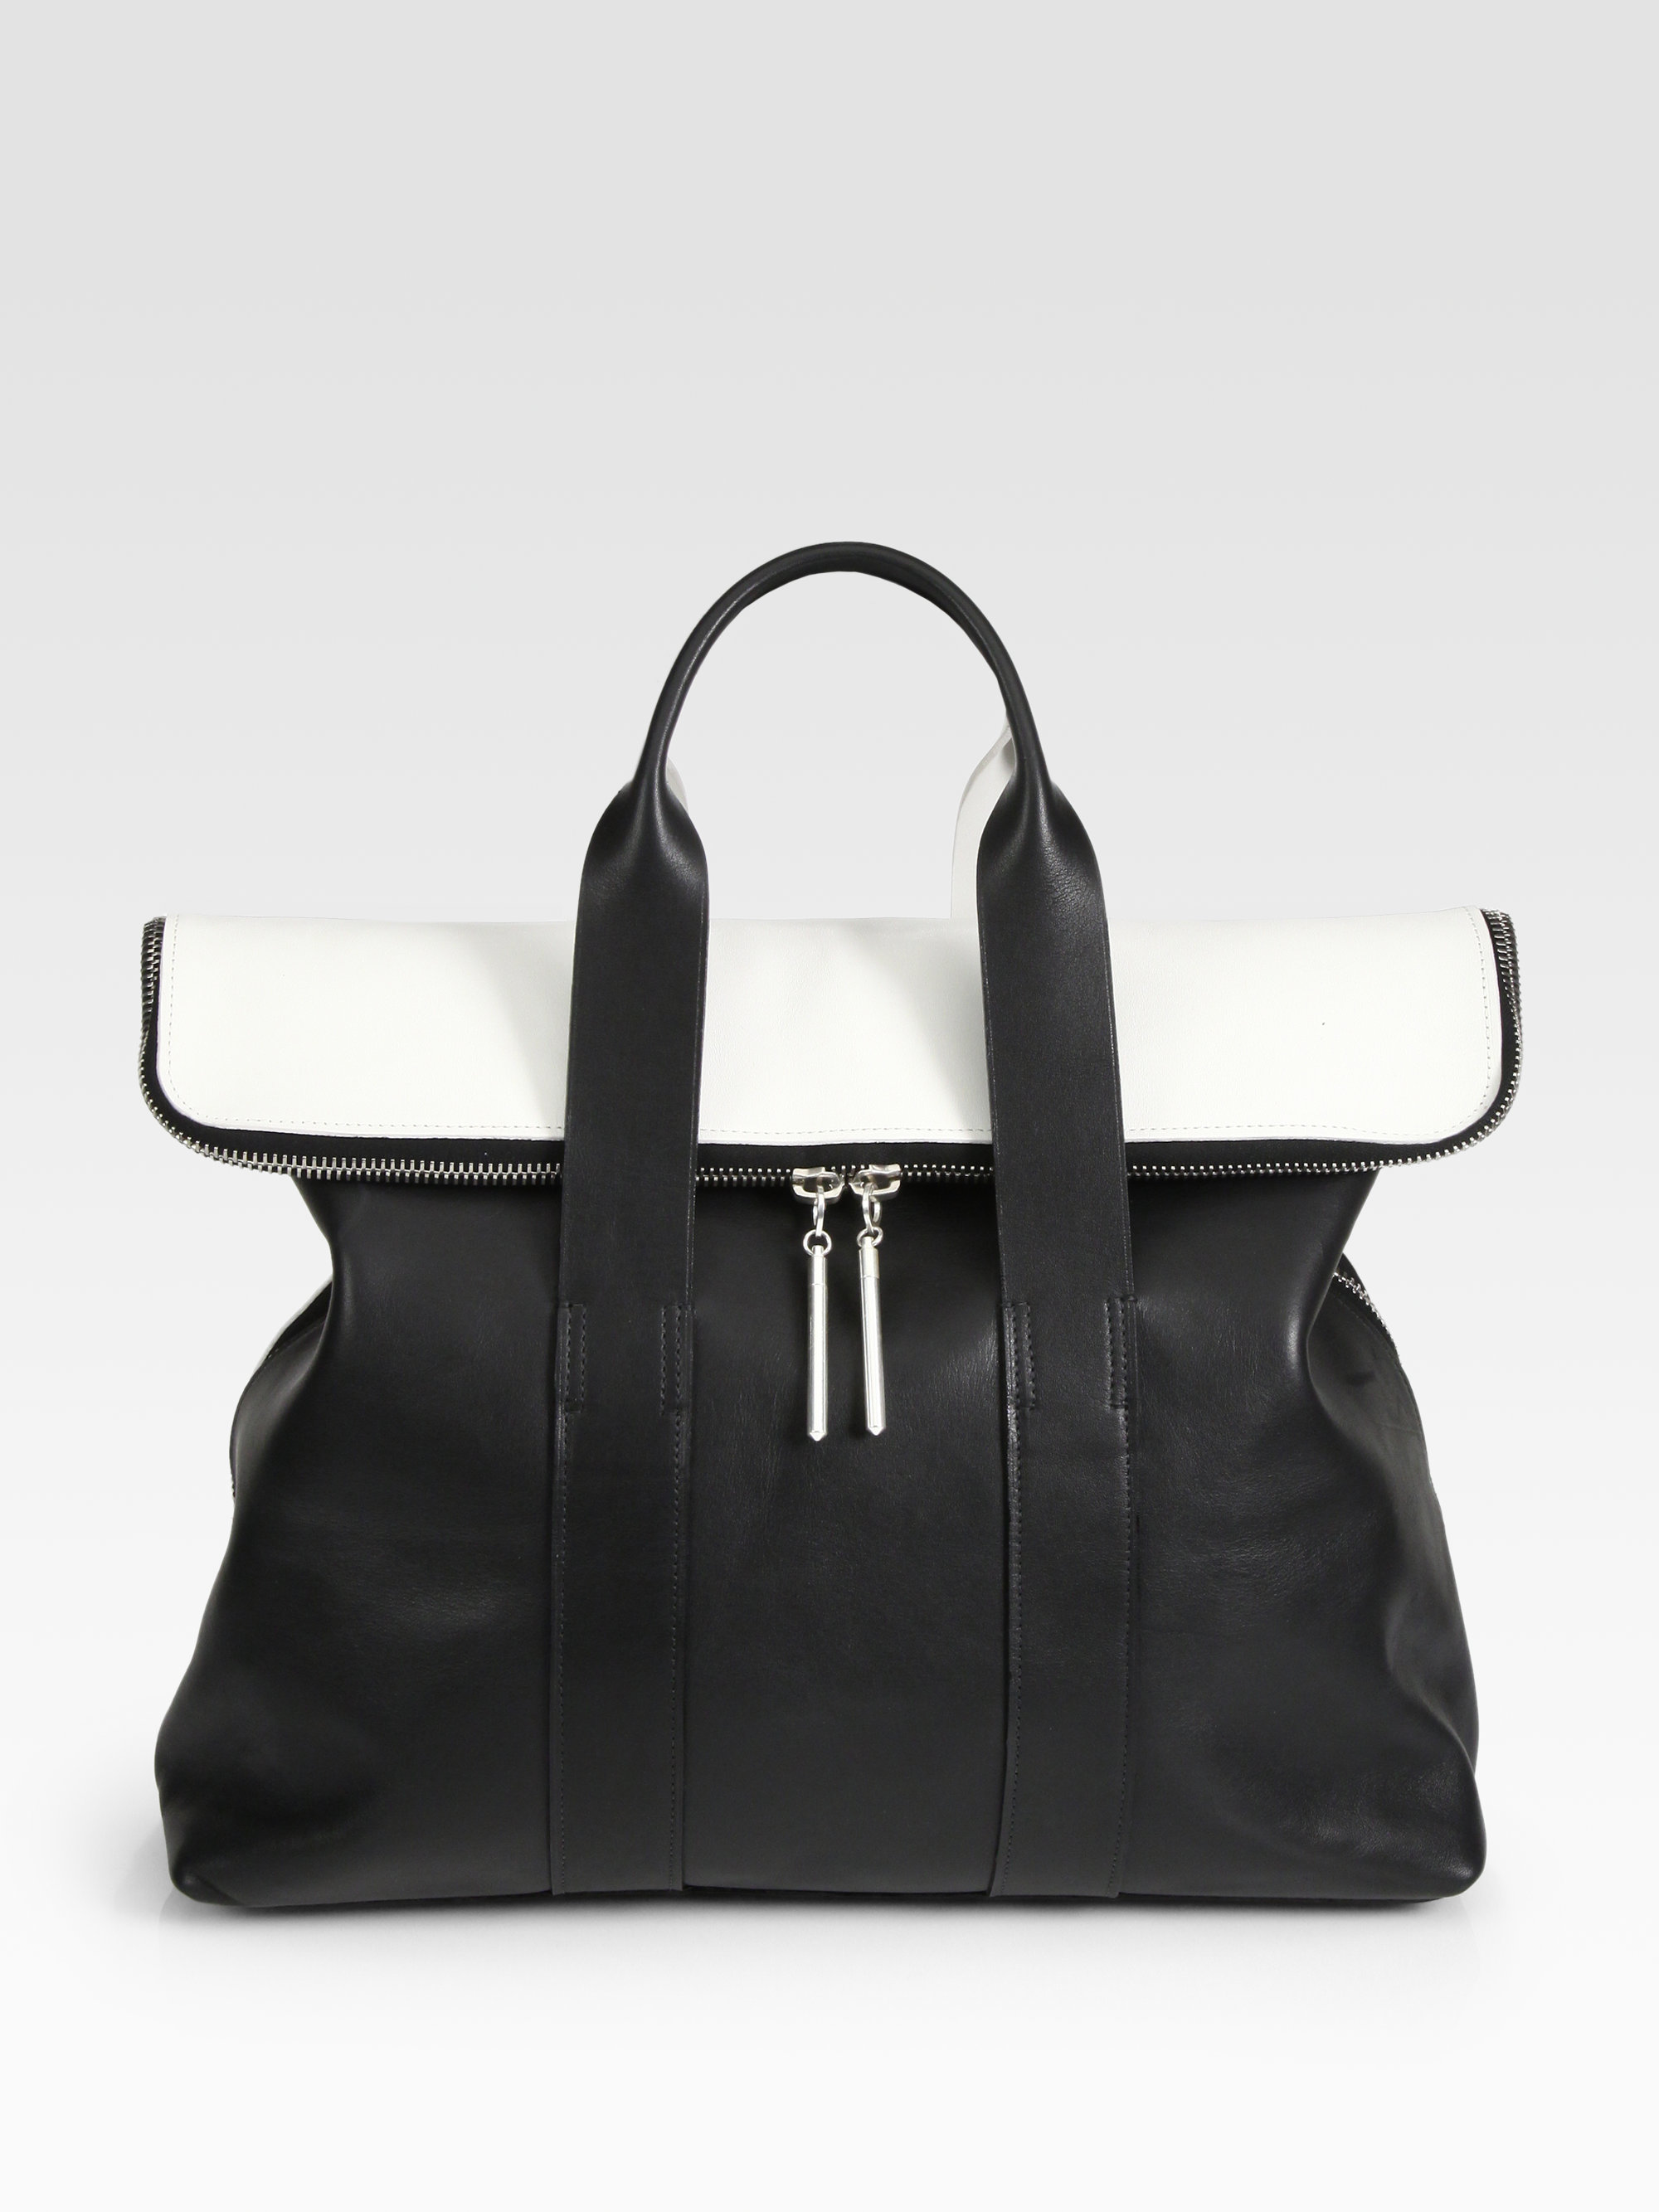 3.1 phillip lim 31 Hour Colorblock Bag in Black | Lyst